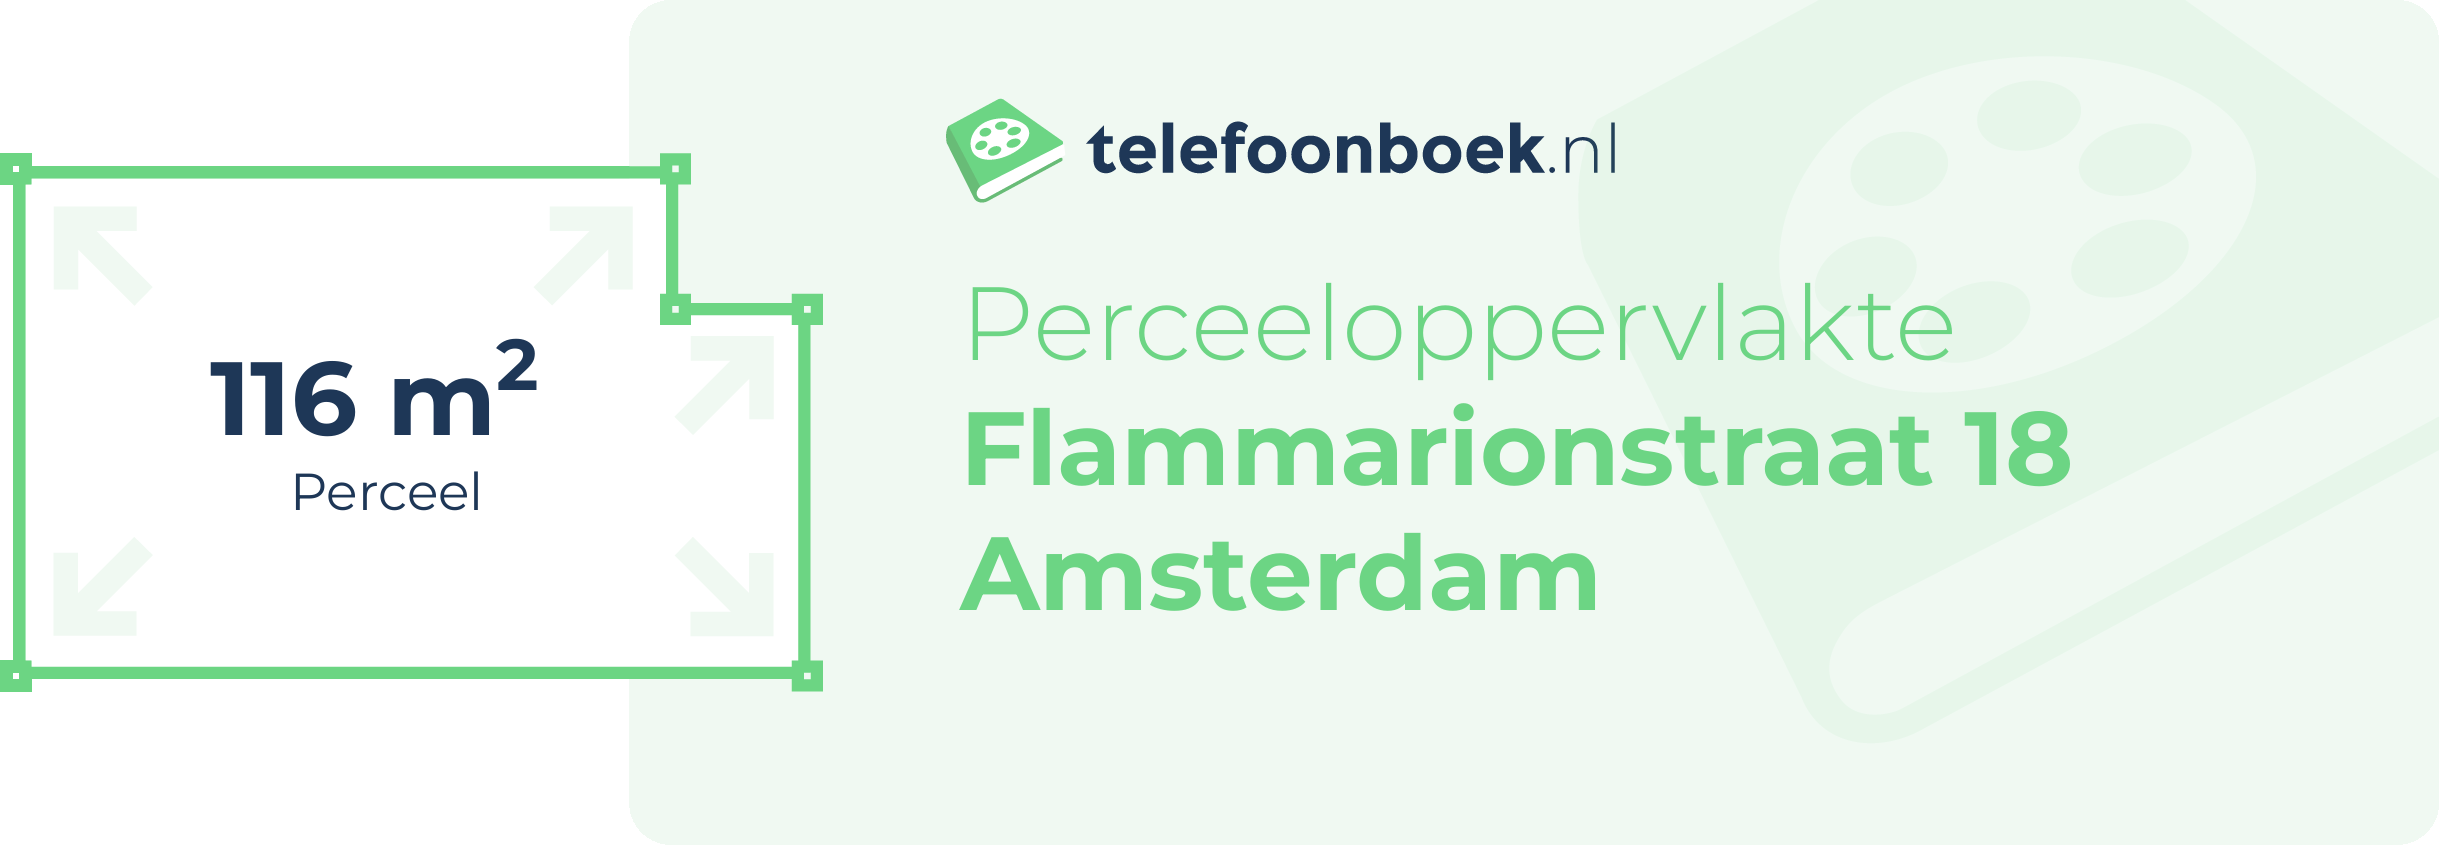 Perceeloppervlakte Flammarionstraat 18 Amsterdam